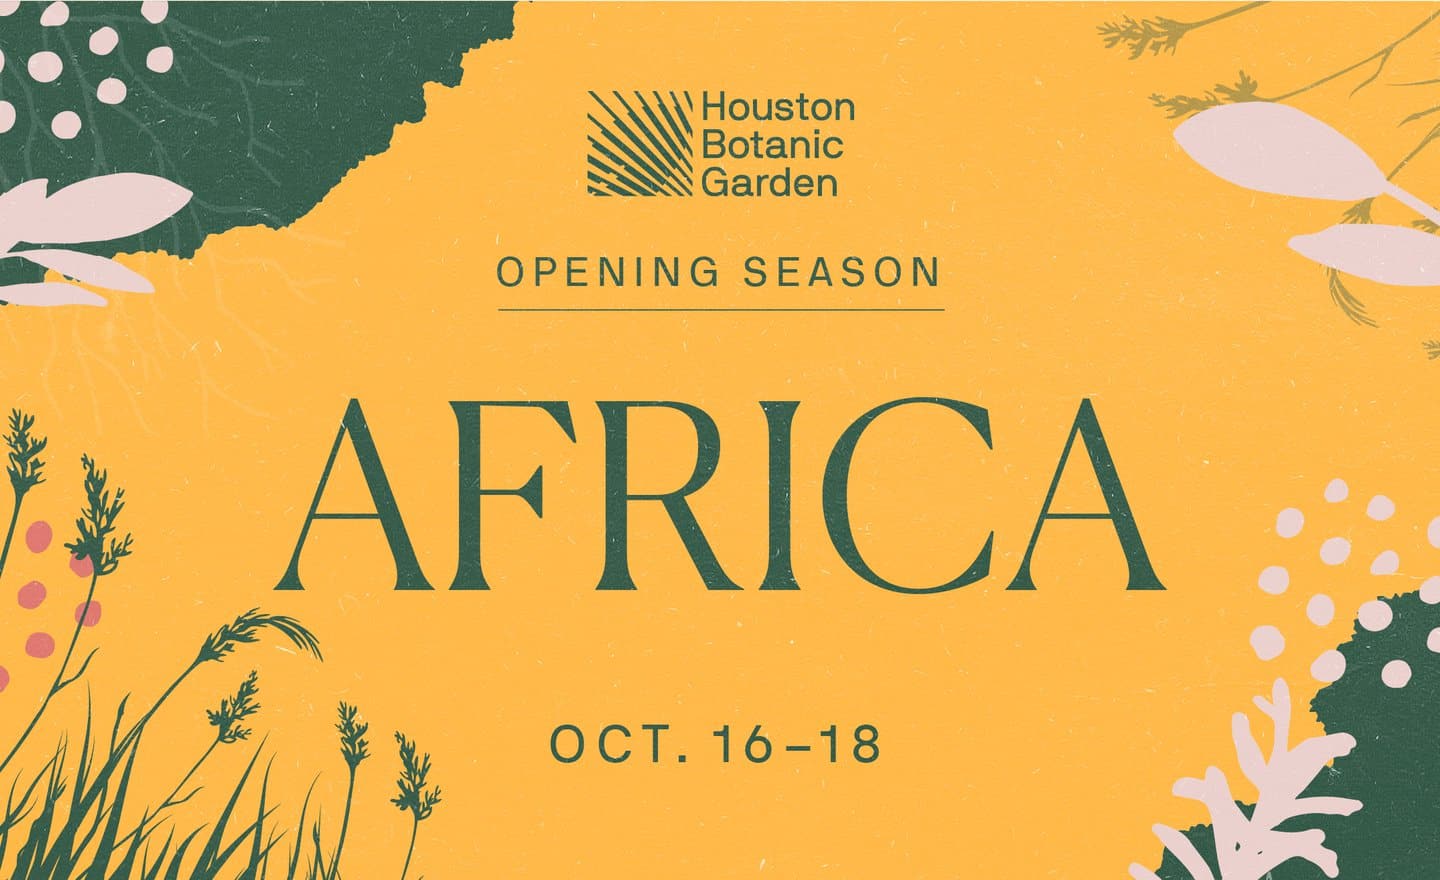 hbg_opening_season_event_design_1200x630_africa